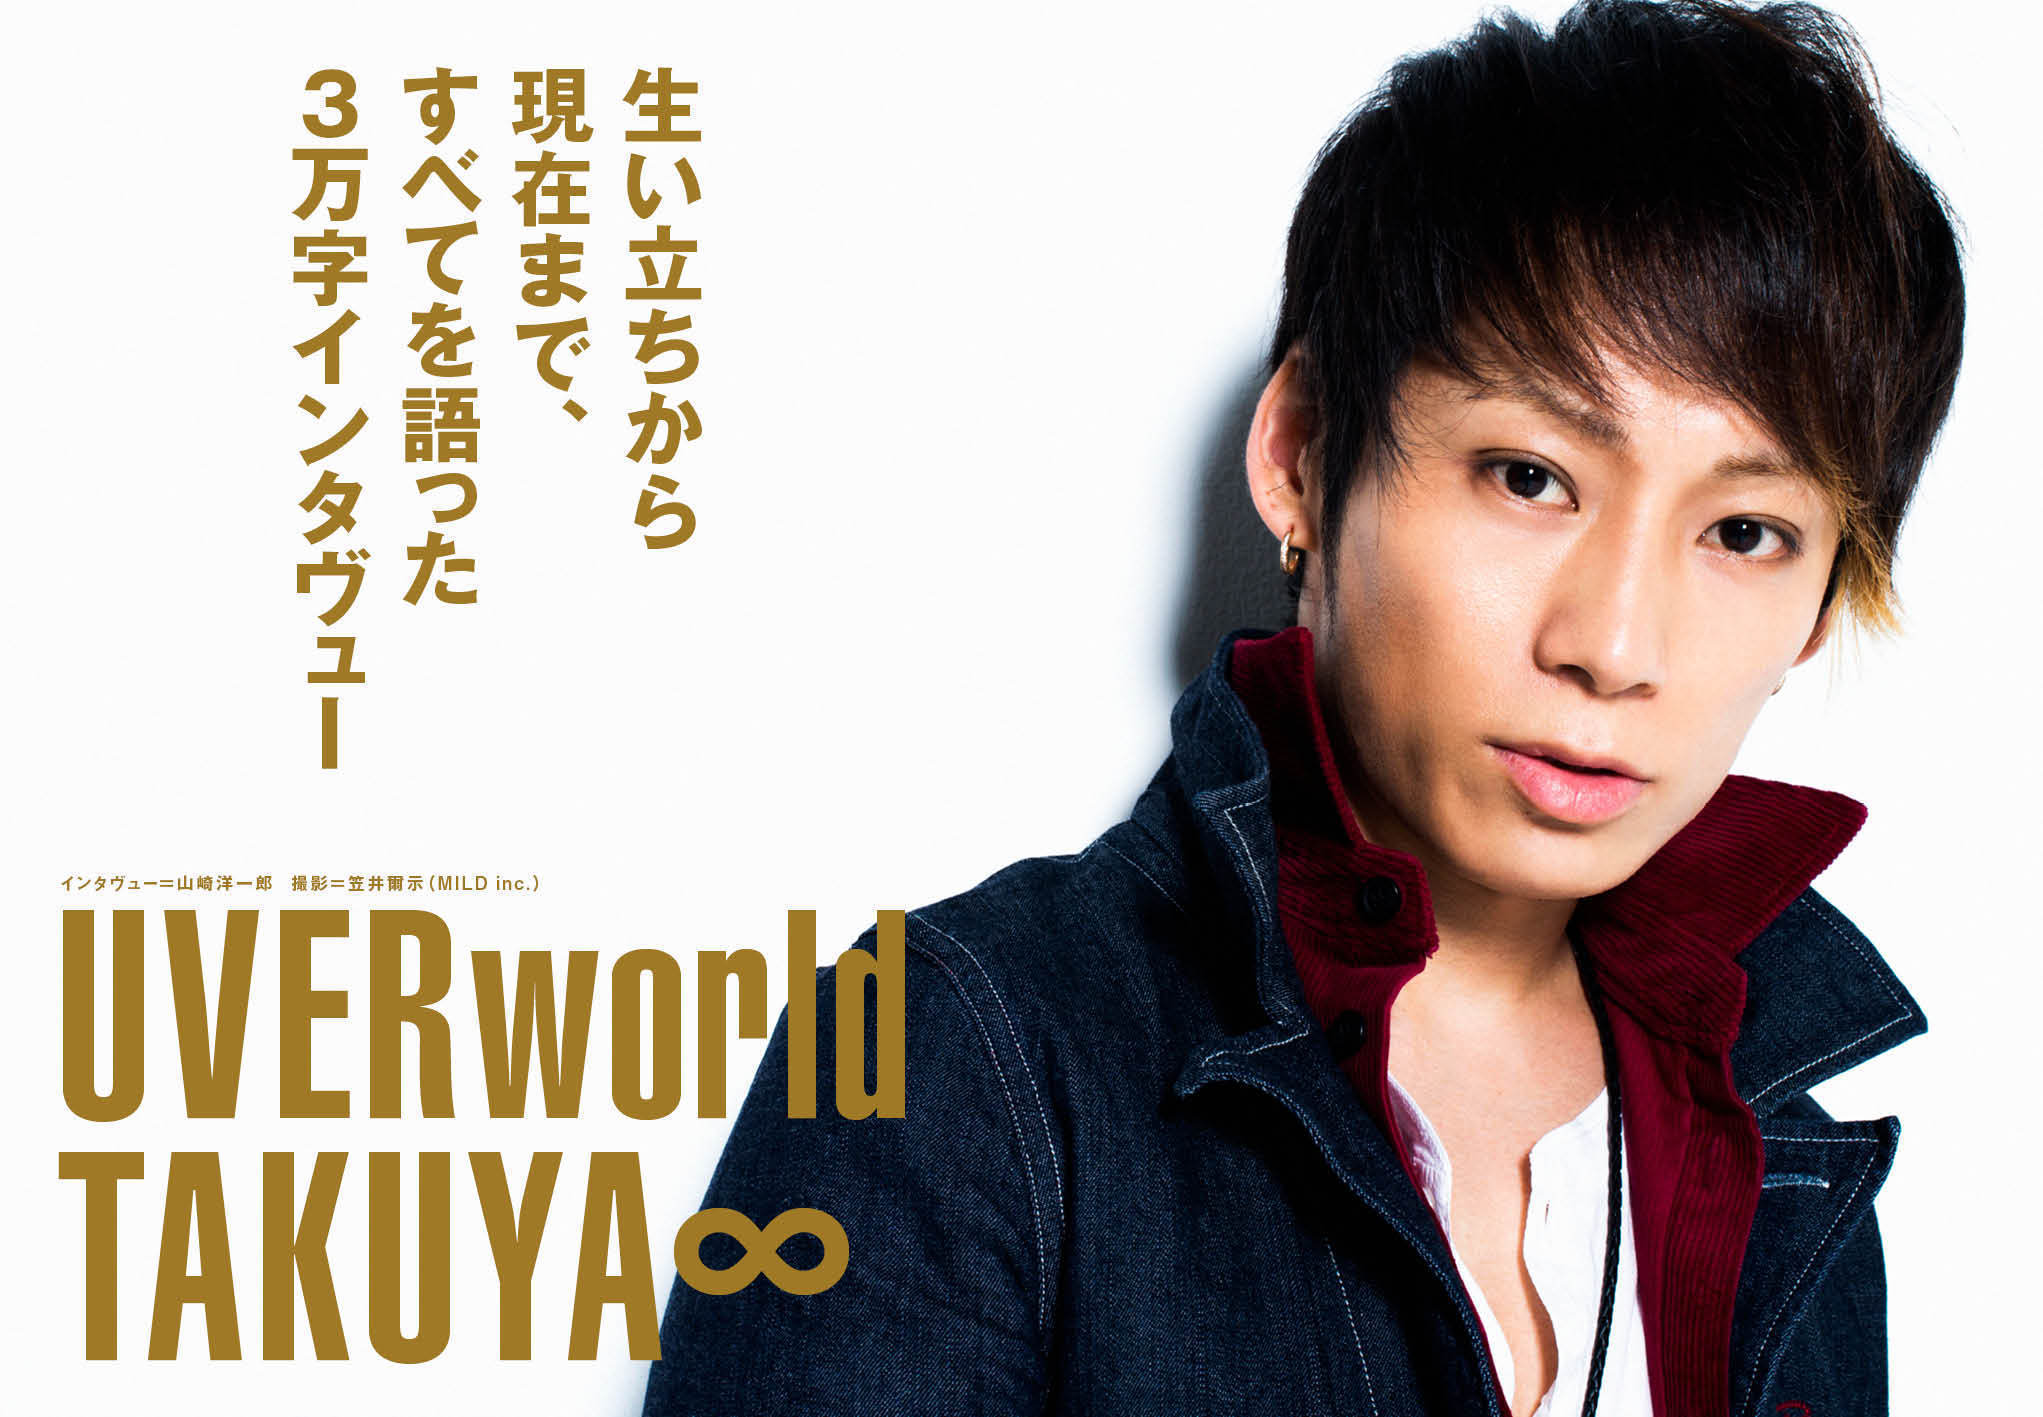 Uverworld Takuya 3万字インタヴューで生い立ちから現在まですべて